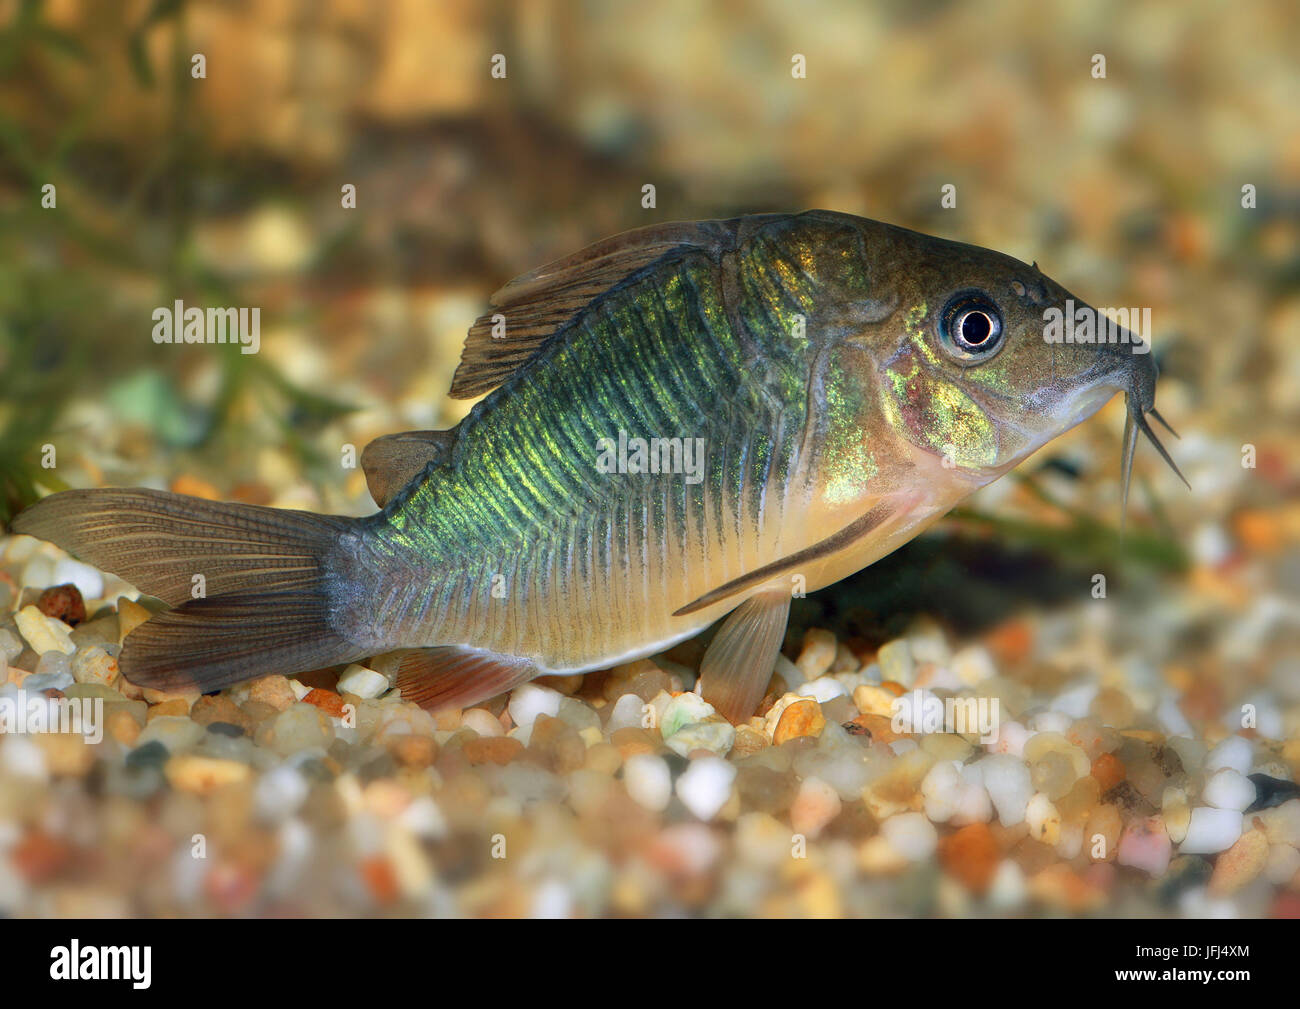 emerald catfish, Brochis splendens, the East of Peru, aquarium fish Stock Photo